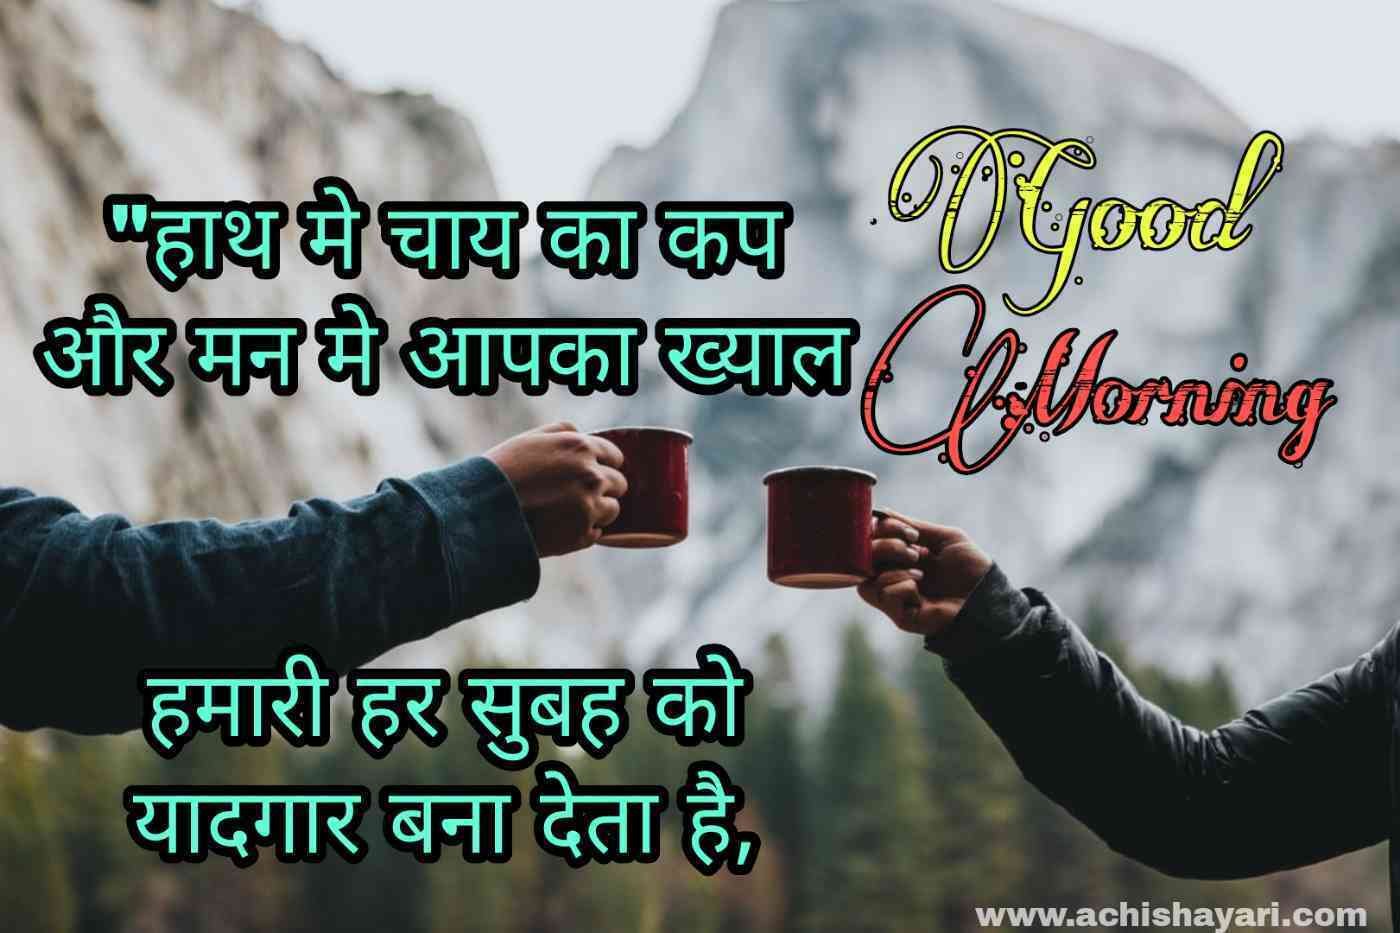 Morning image hindi messages